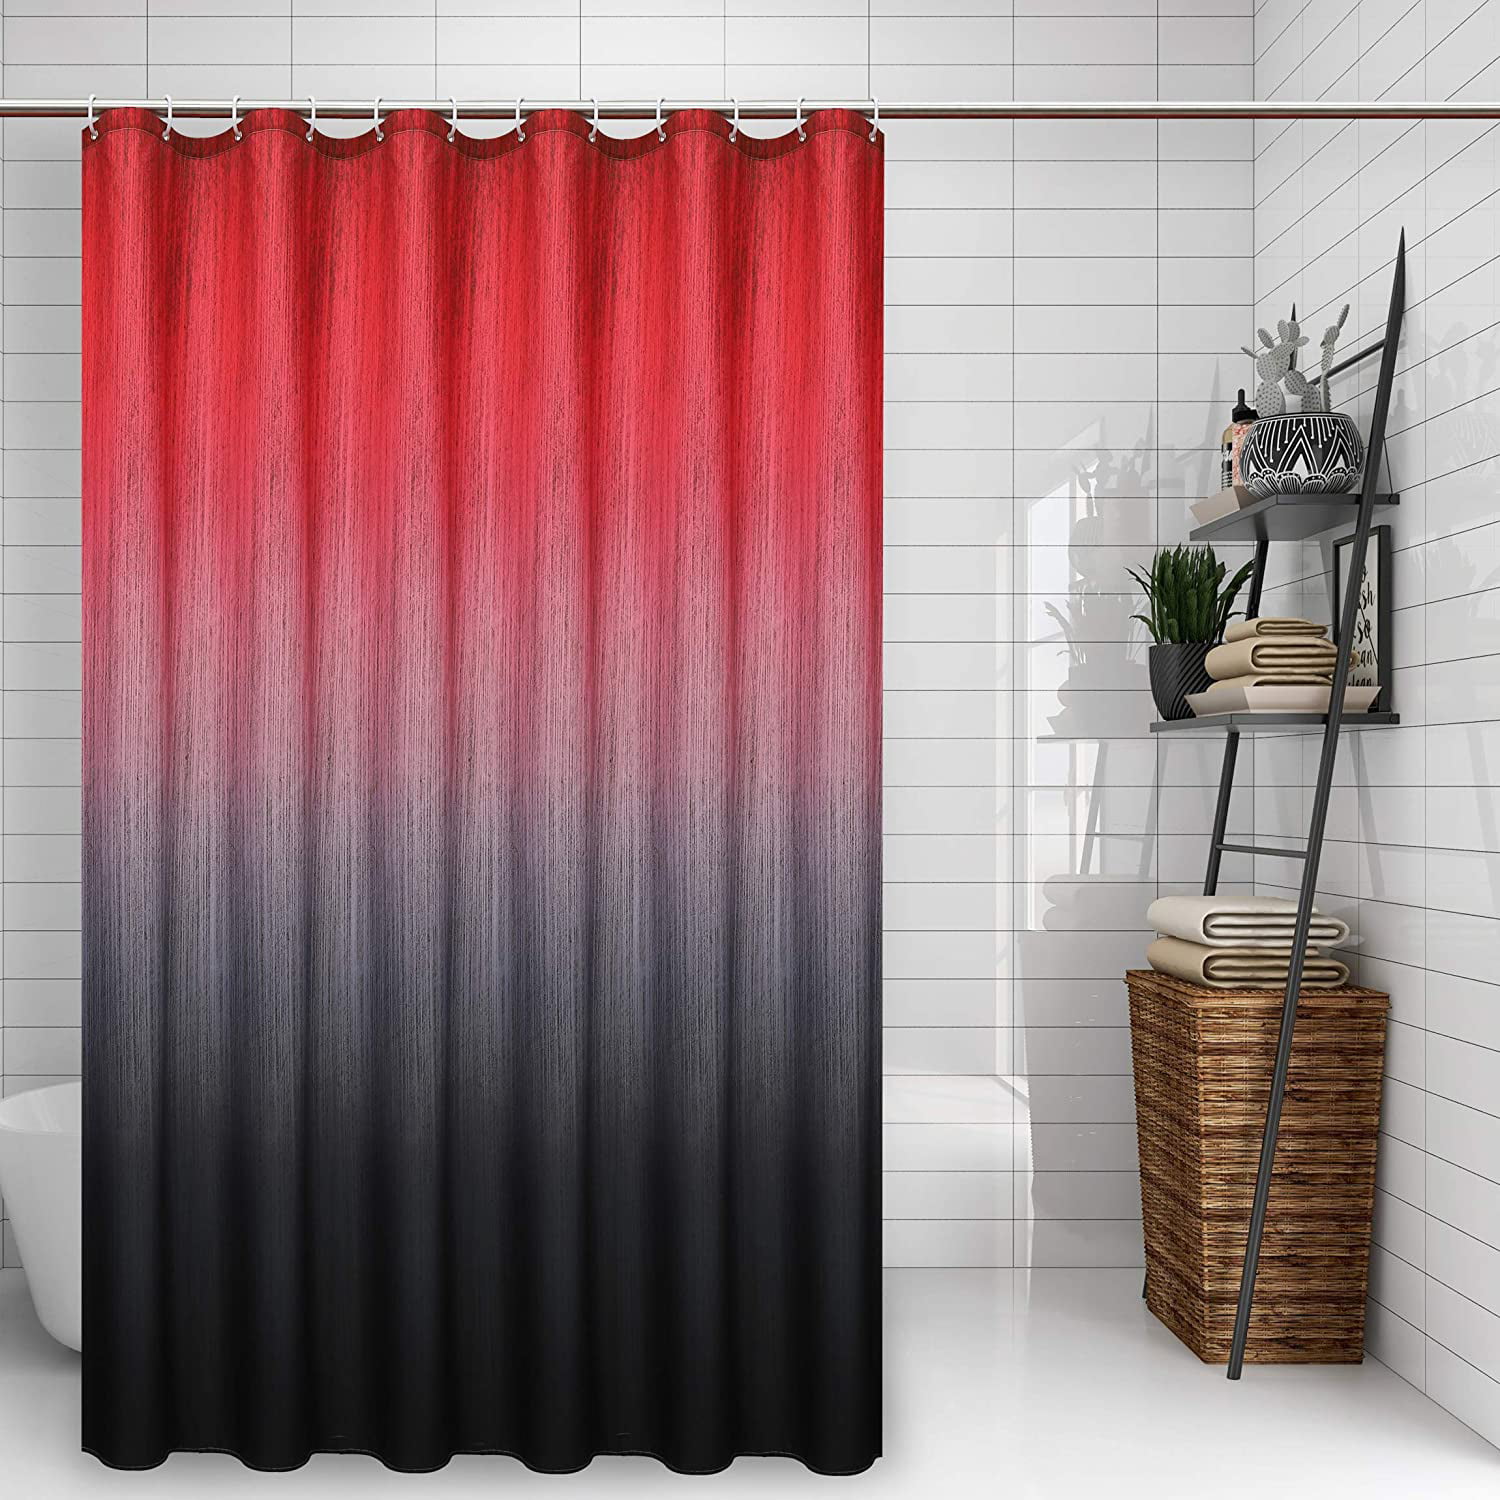 Gradient Rose Red Shower Curtain Bath Mat Waterproof Mildew Fabric & 12 Hooks 